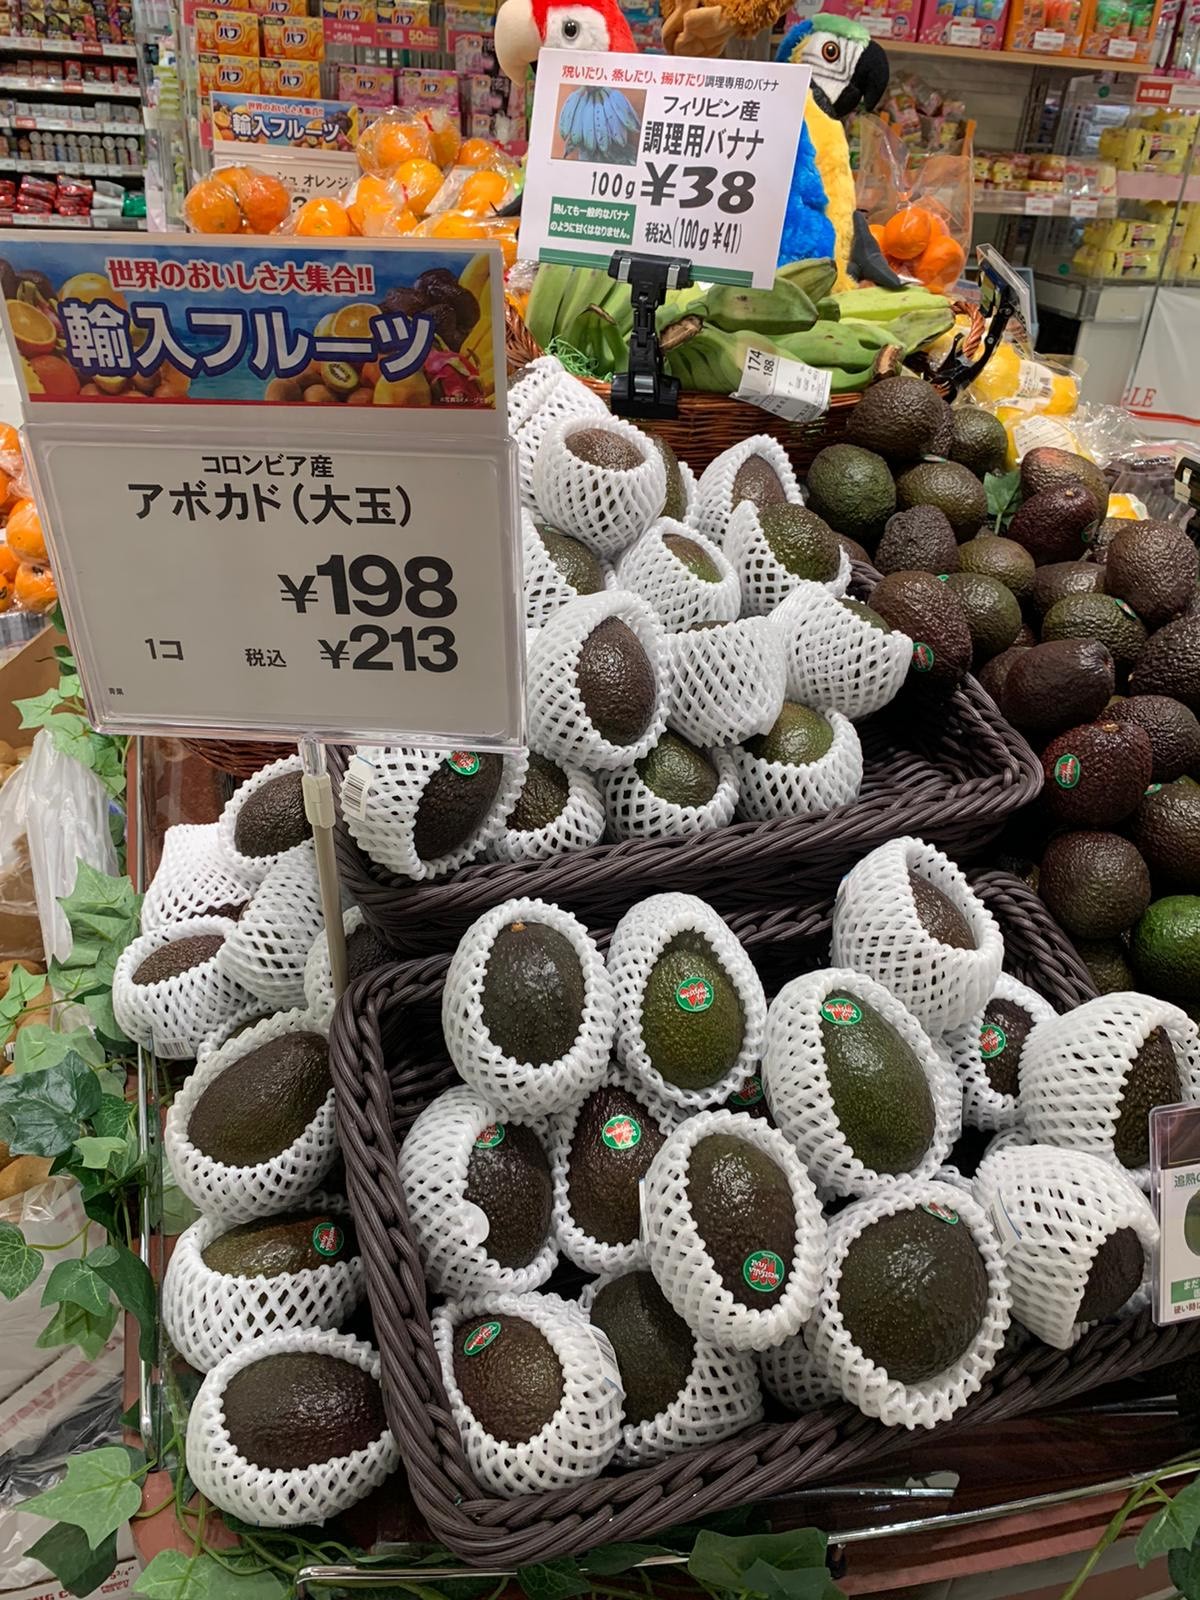 Westfalia Fruit sends Colombian avocados to Japan